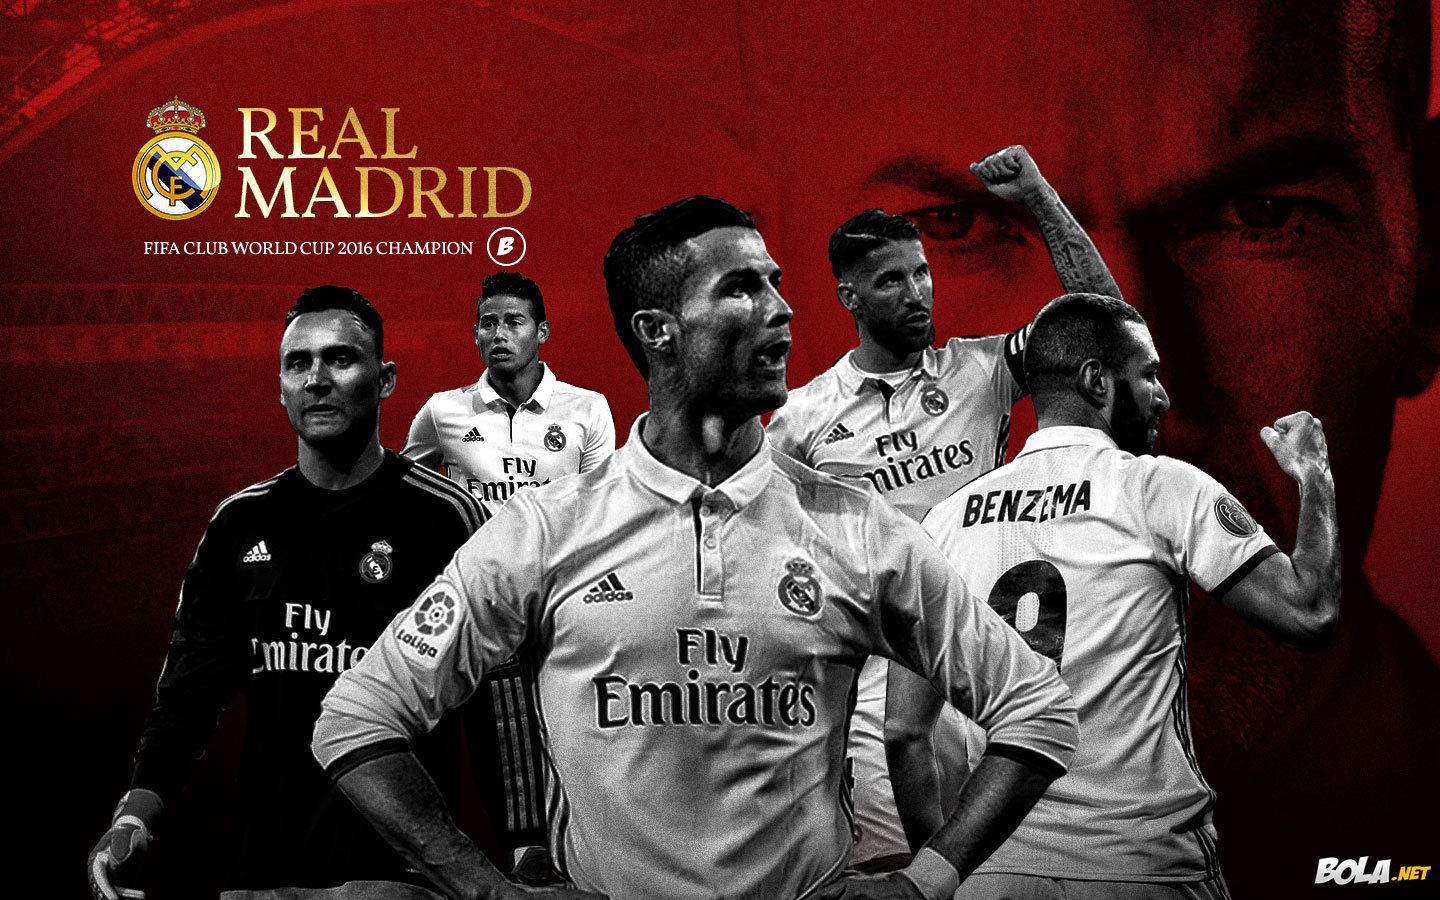 Deskripsi : Wallpaper Real Madrid Juara Pd Antar Klub, size: 1440x900